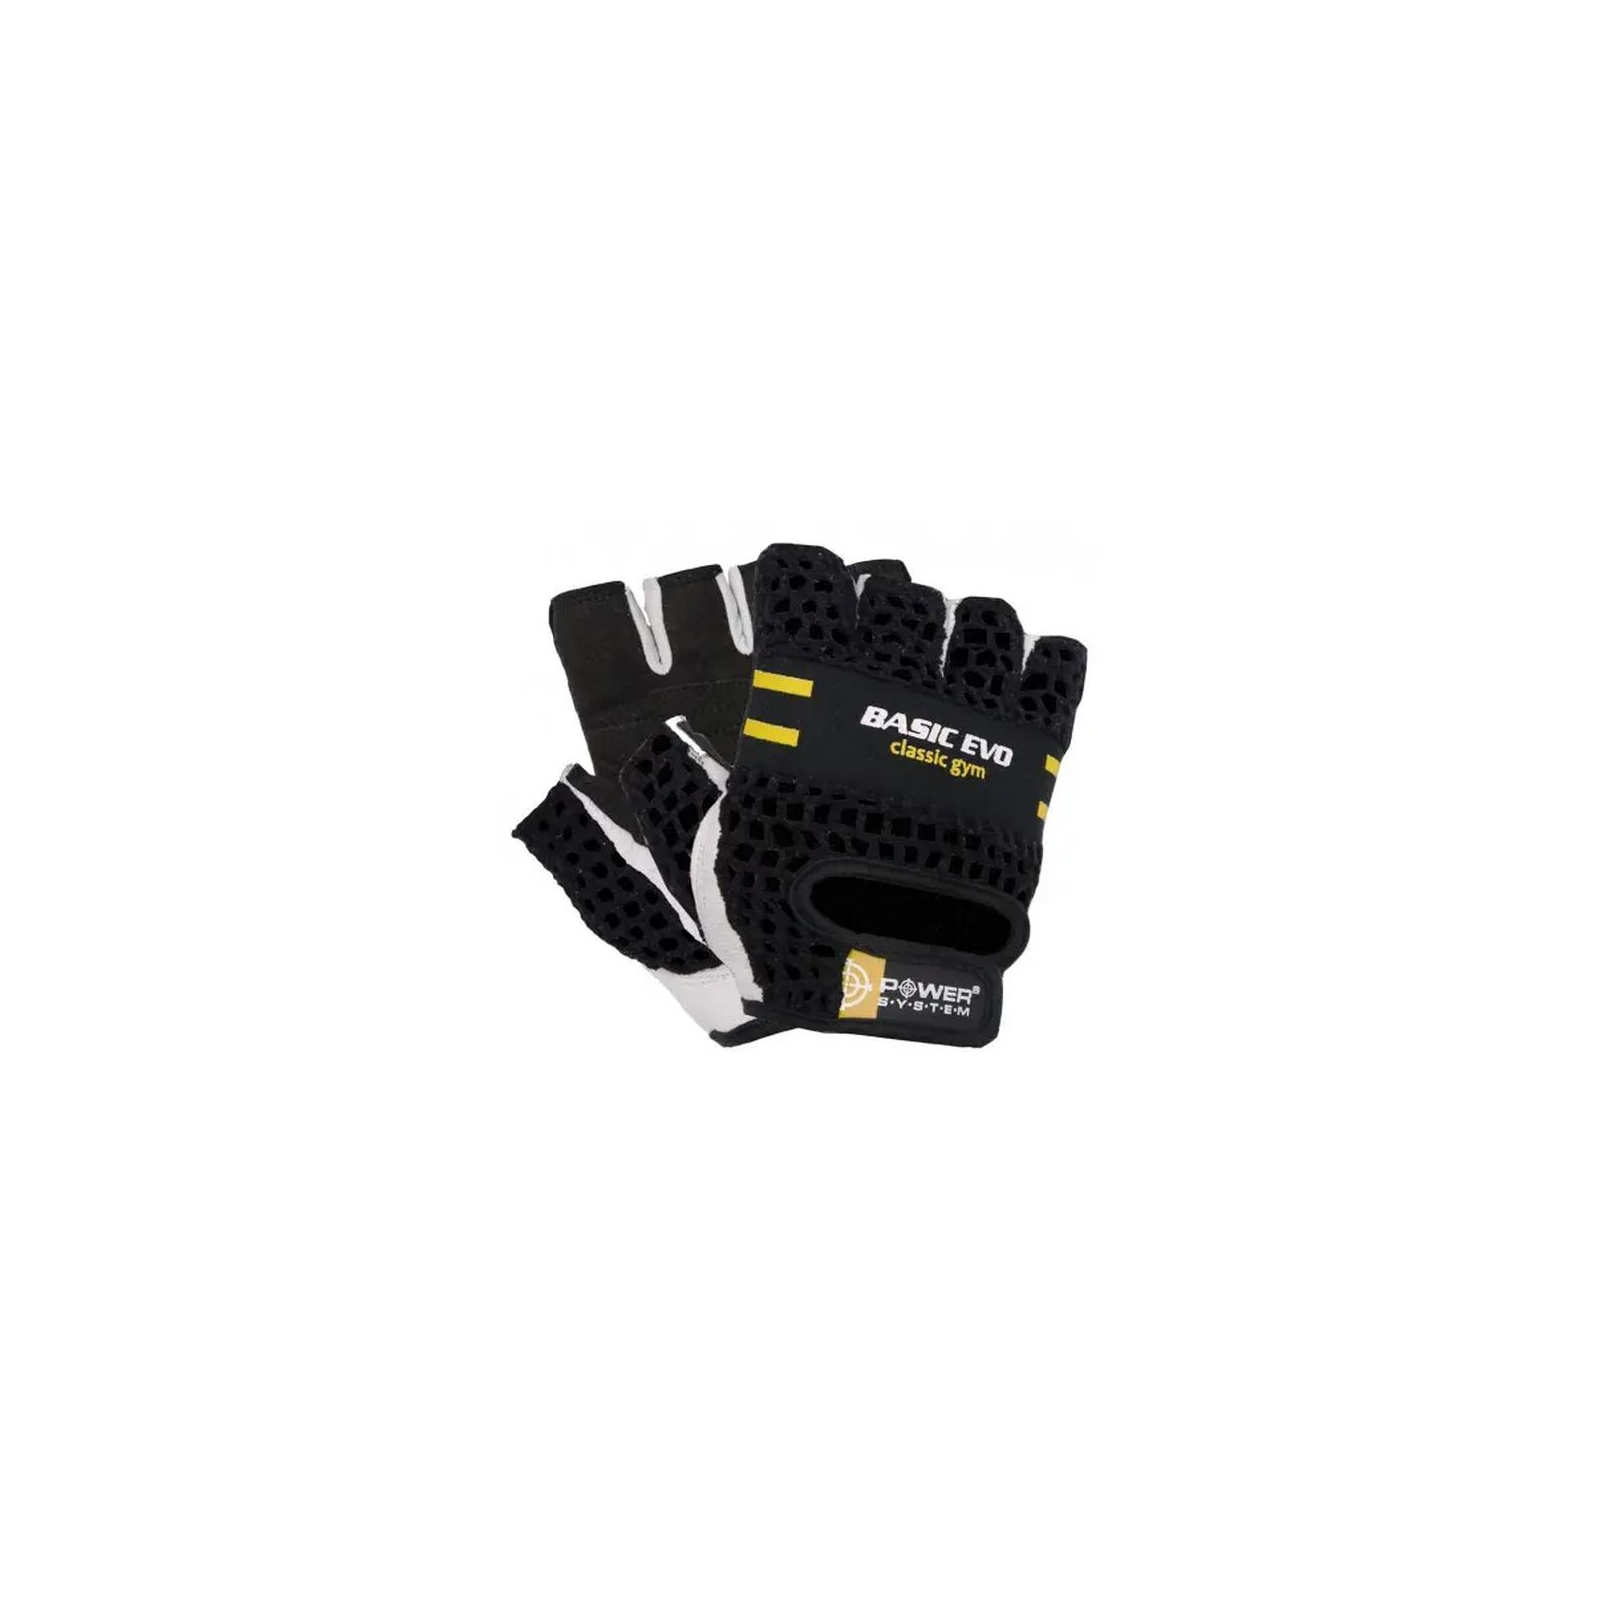 Перчатки для фитнеса Power System Basic EVO PS-2100 S Black Yellow Line (PS_2100E_S_Black/Yellow)